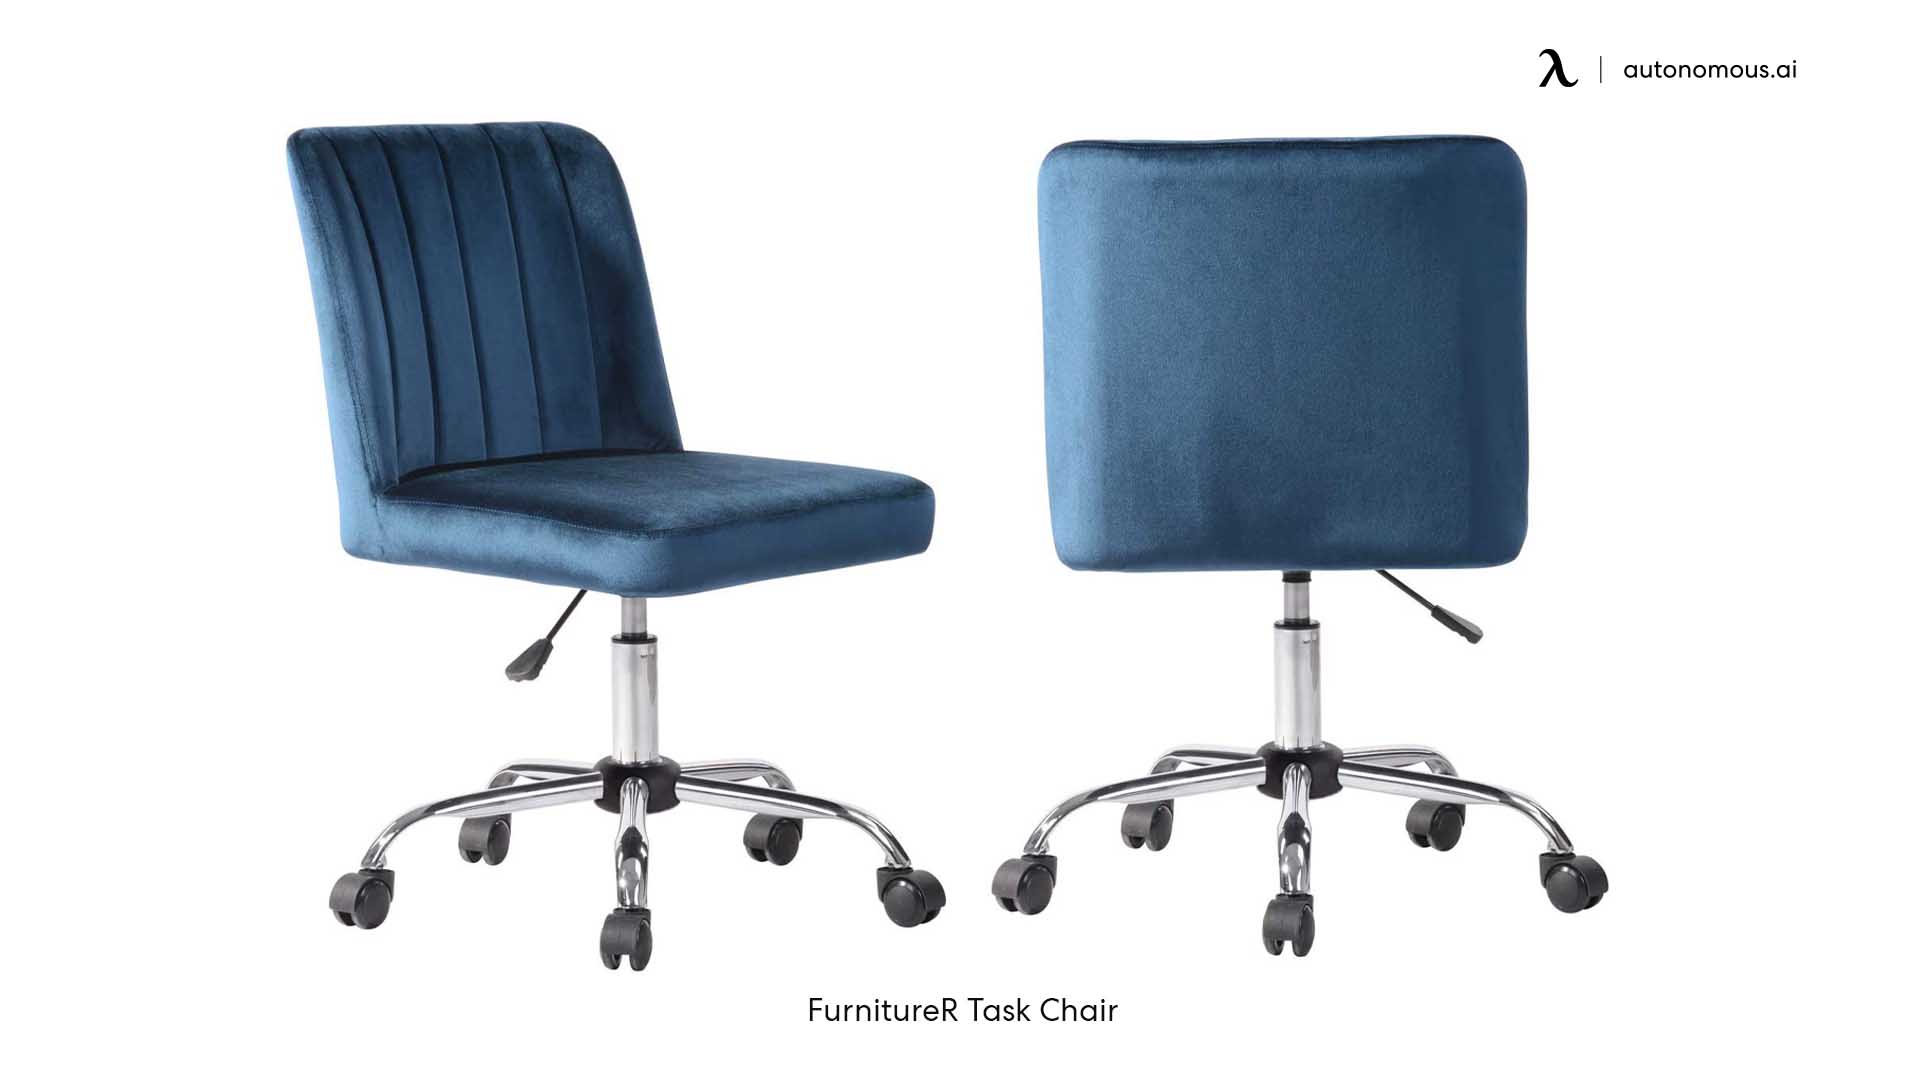 FurnitureR Task Chair